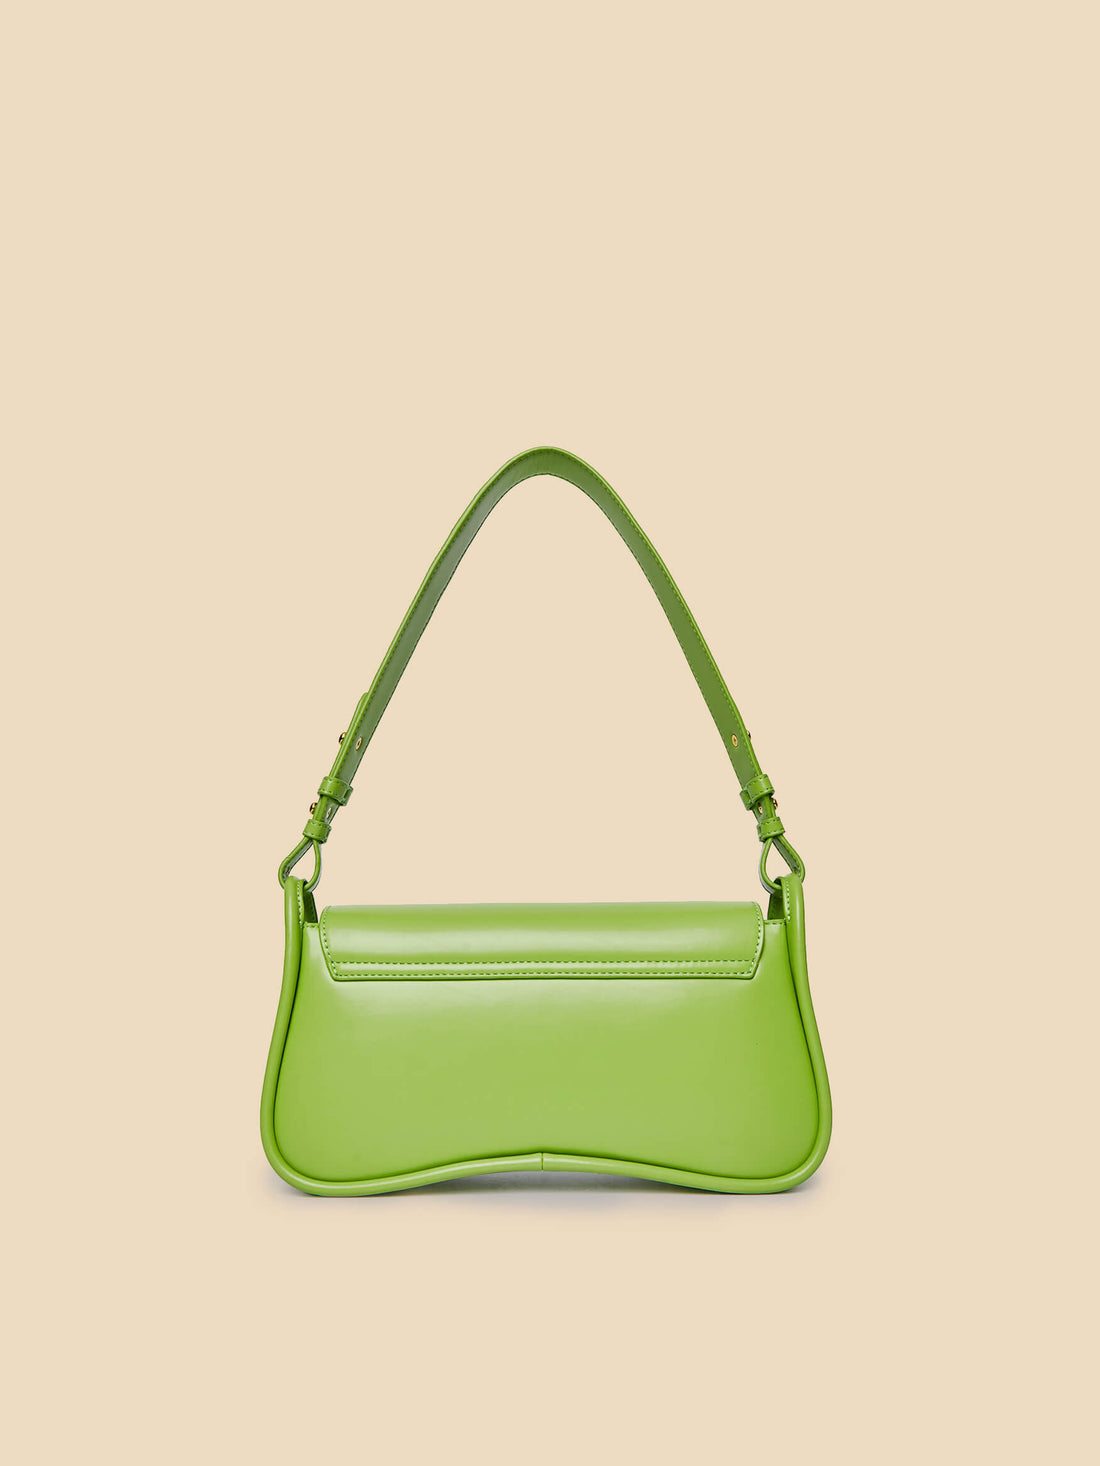 SINBONO Zoe Shoulder Bag - Eco-Friendly Leather Bag